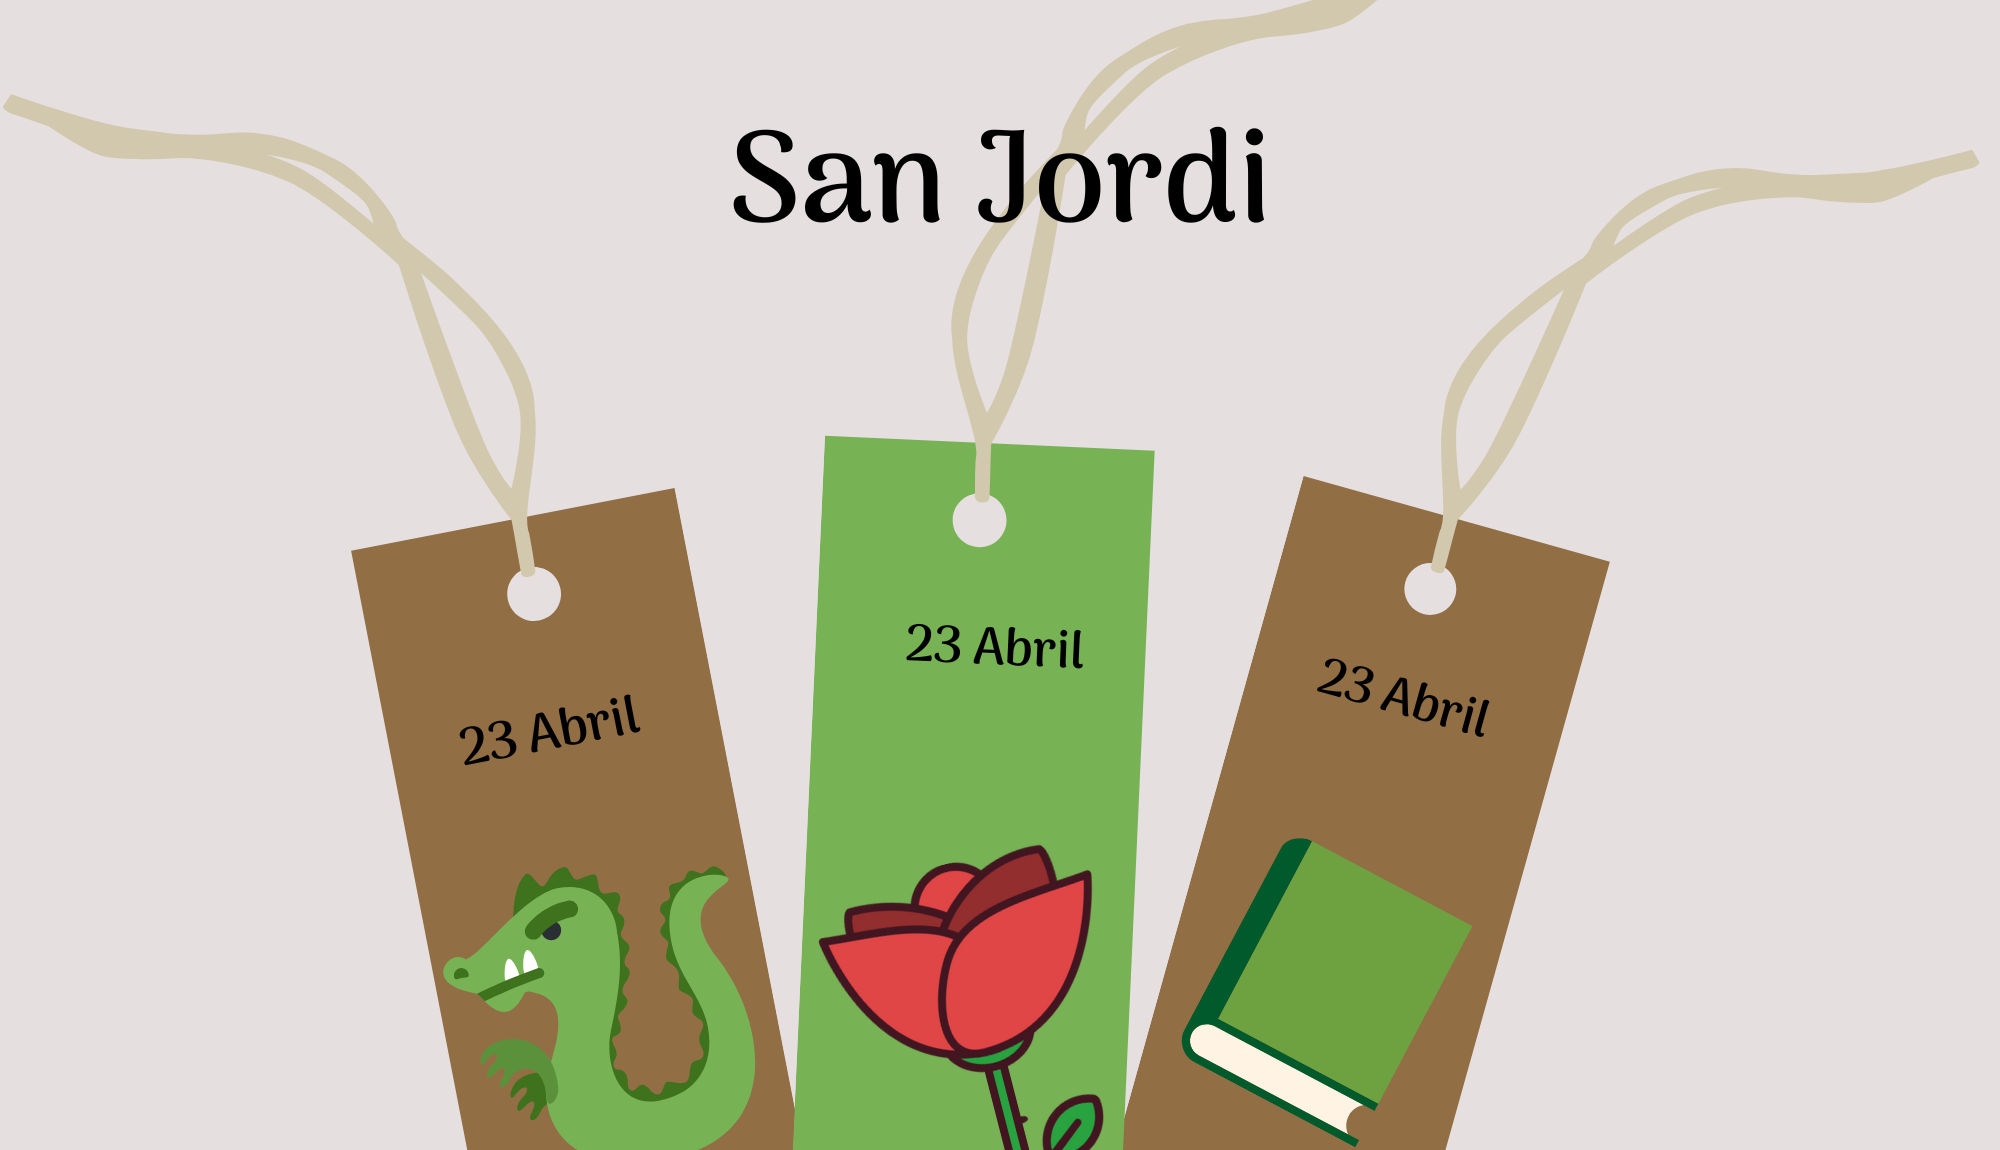 Blog Teterum. Sant Jordi, mucho más que rosas y libros. Site www.teterum.com